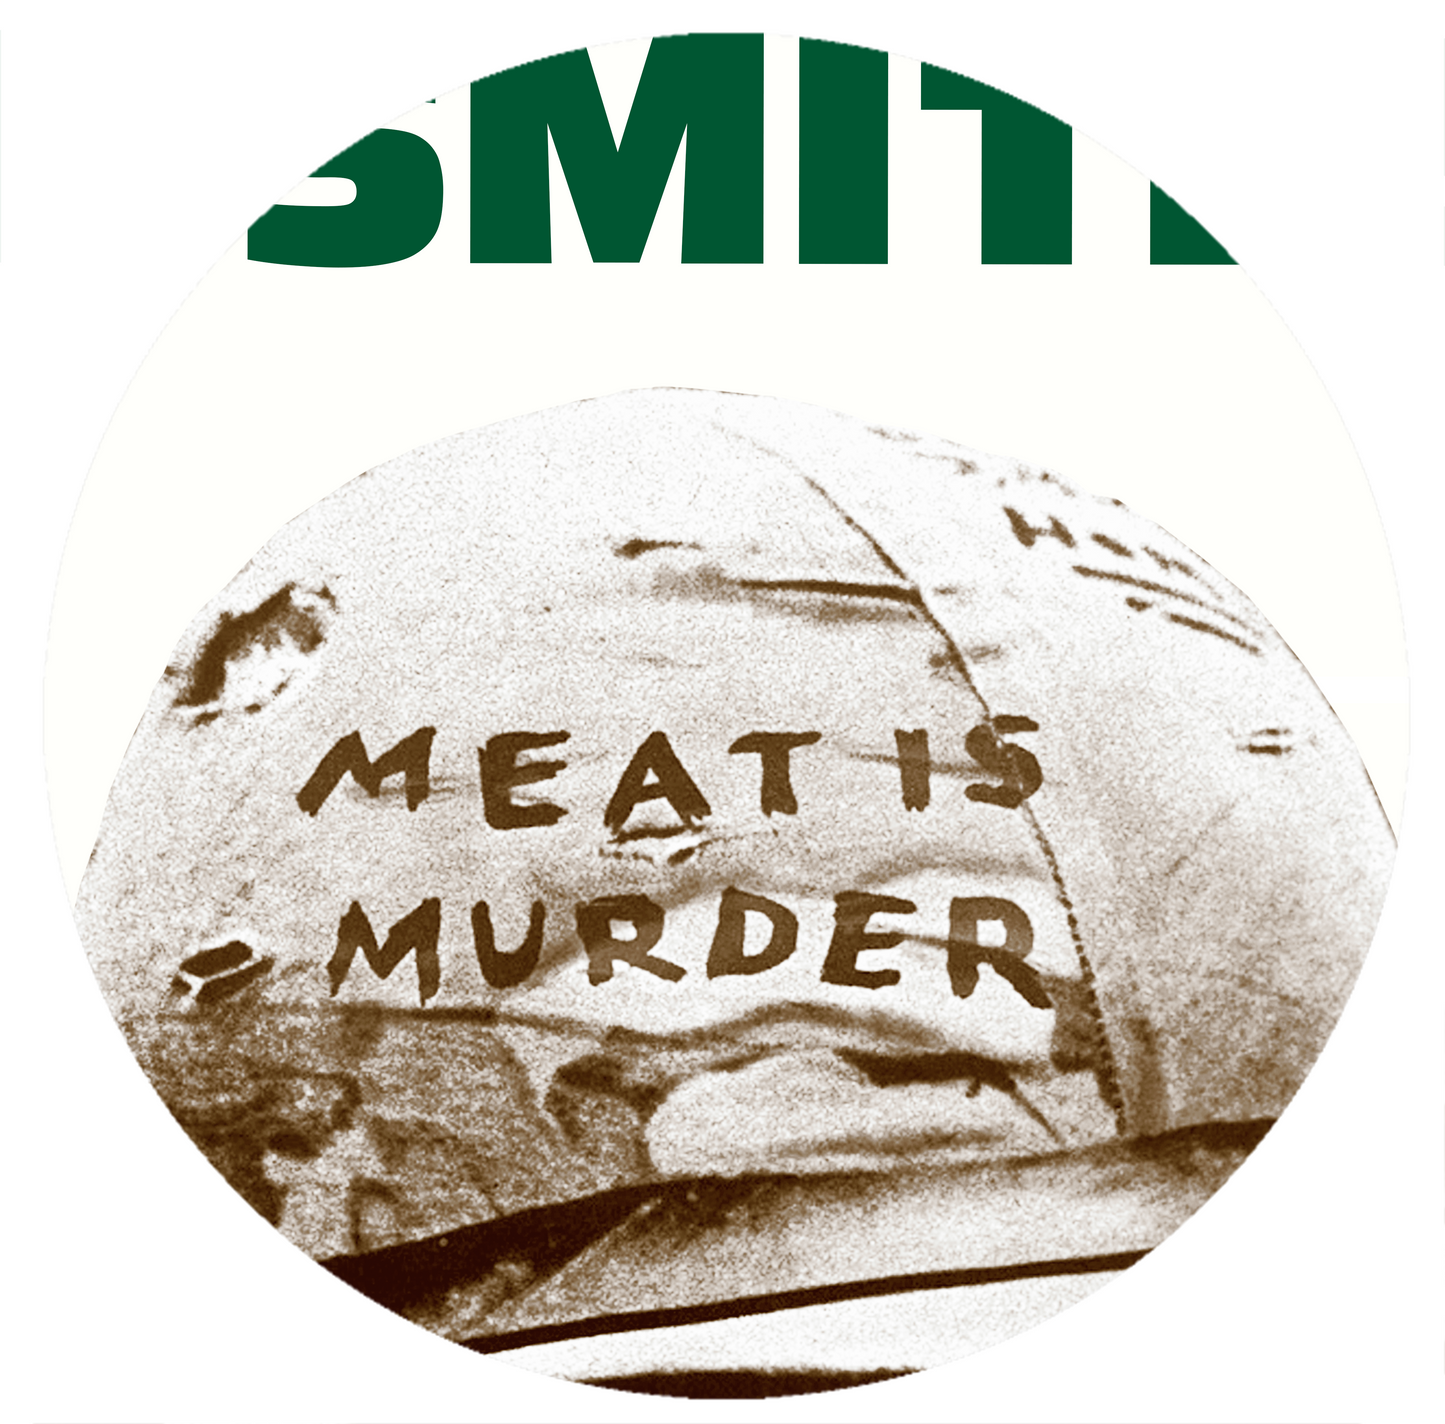 THE SMITHS - MEAT IS MURDER - Green Text - Women's T Shirt